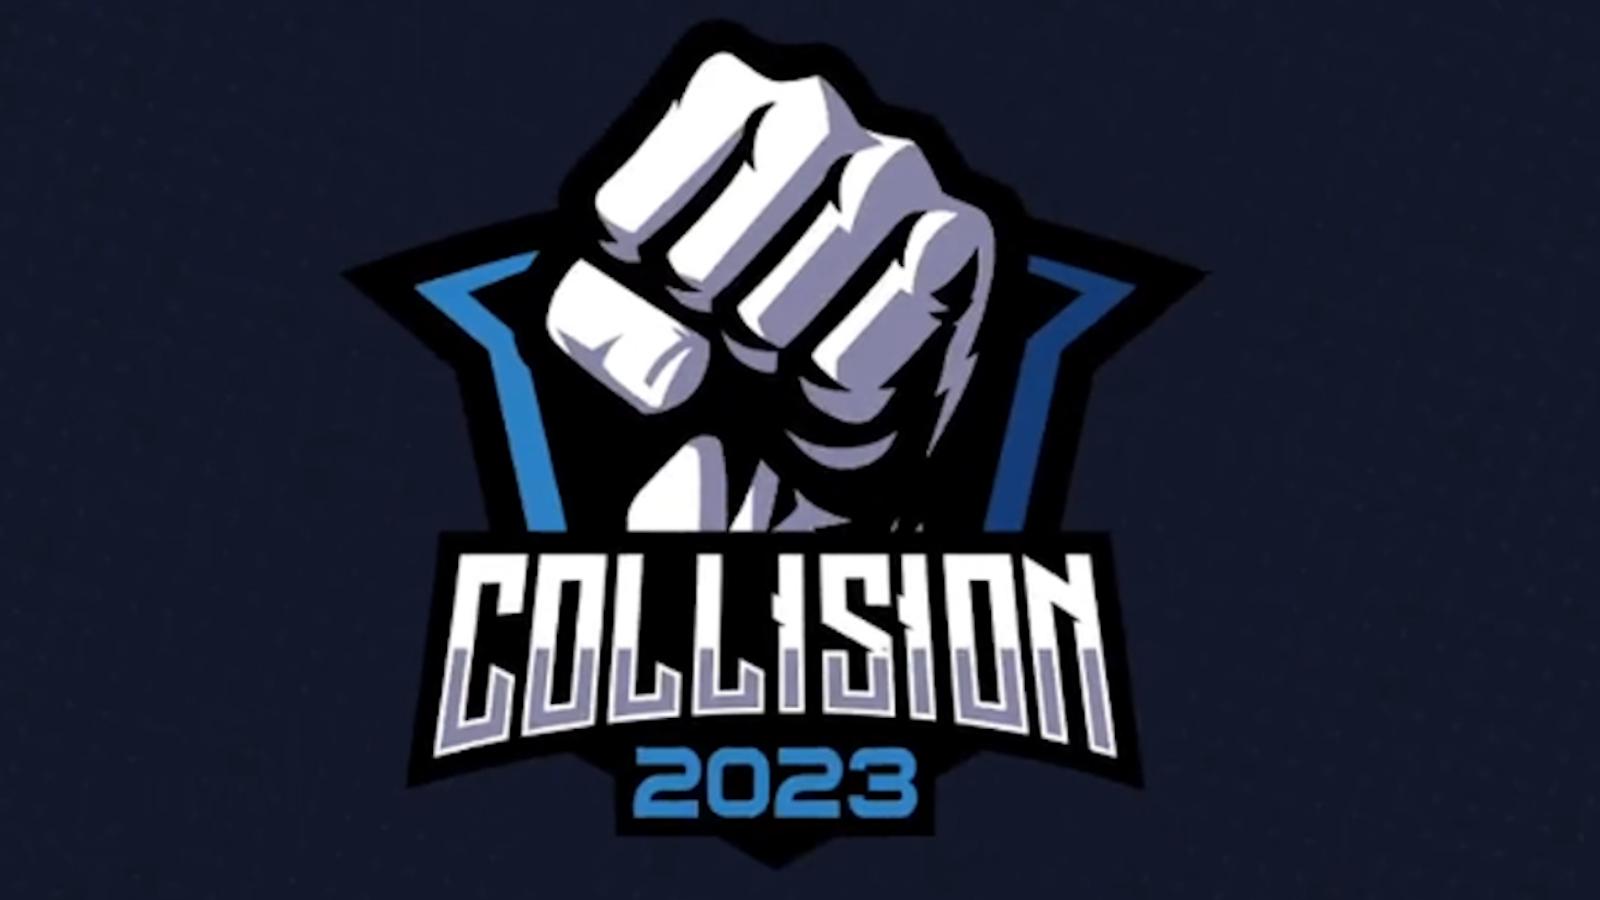 Collision smash tournament logo